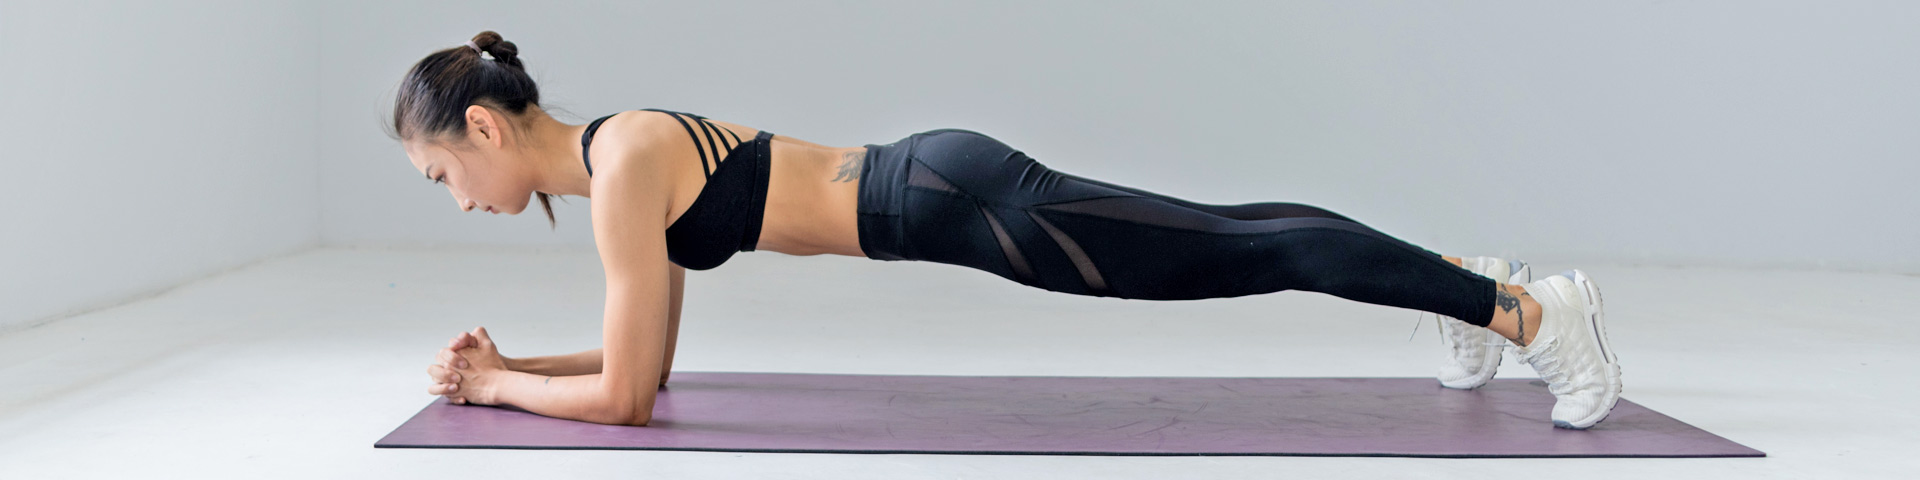 Vita Health and Fitness ⋆ Yoga ⋆ Pilates ⋆ Personal Training